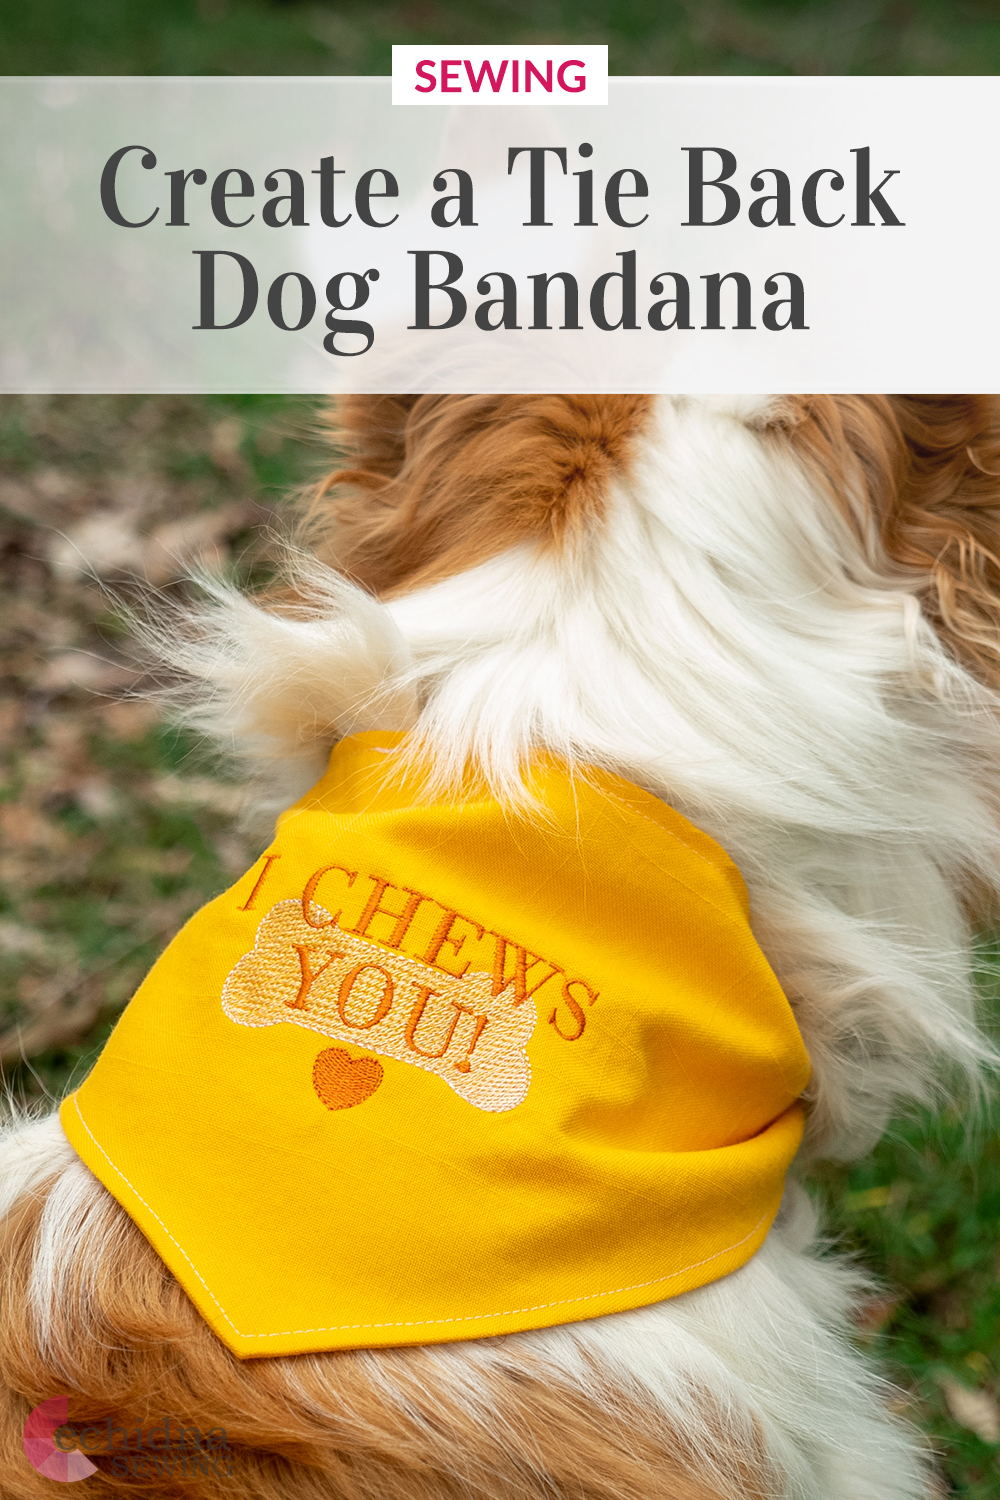 Dog Bandana Project Pinterest